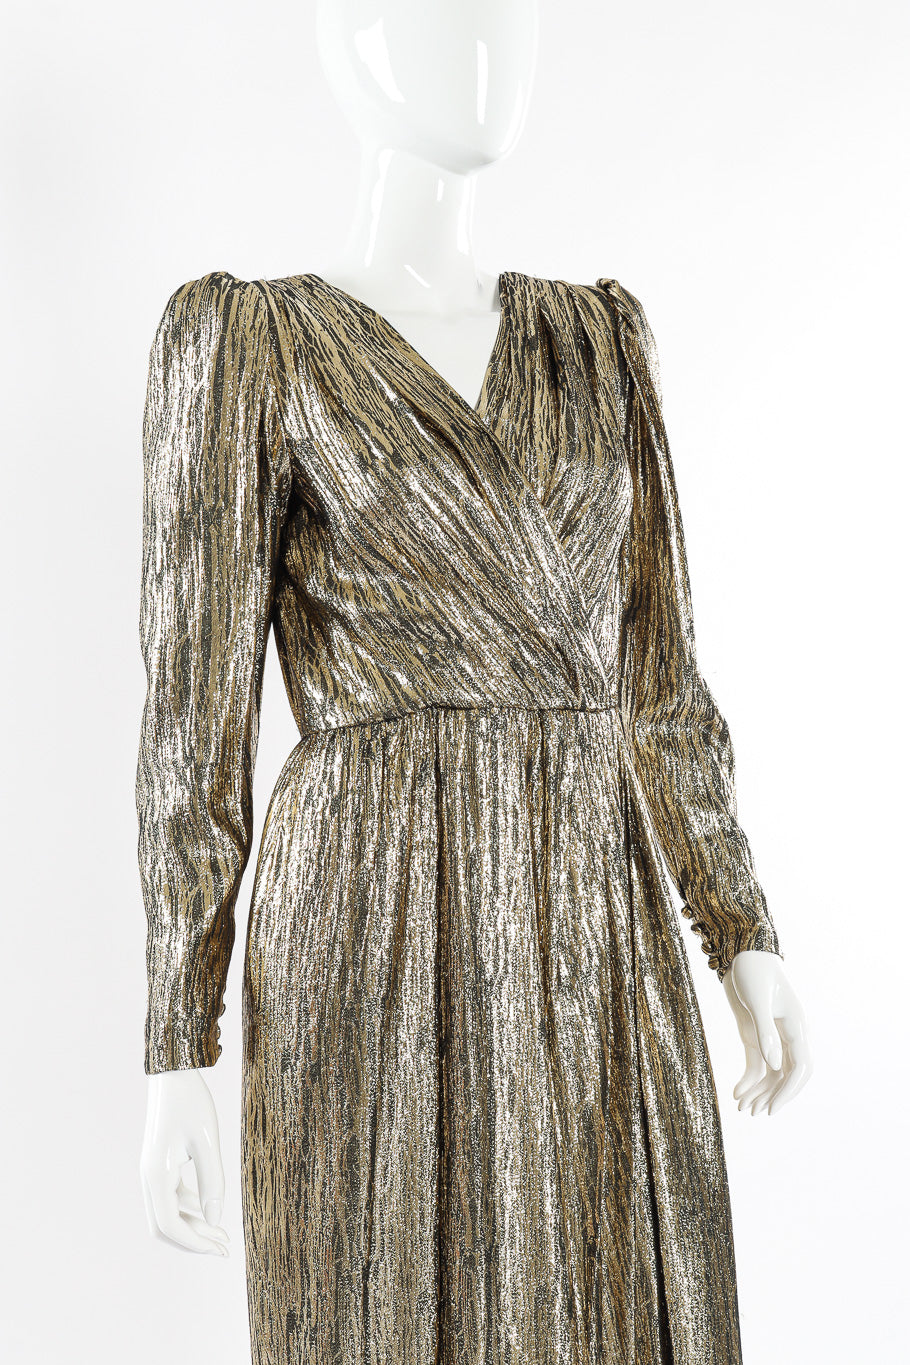 Metallic dress by Nolan Miller mannequin three quarter @recessla